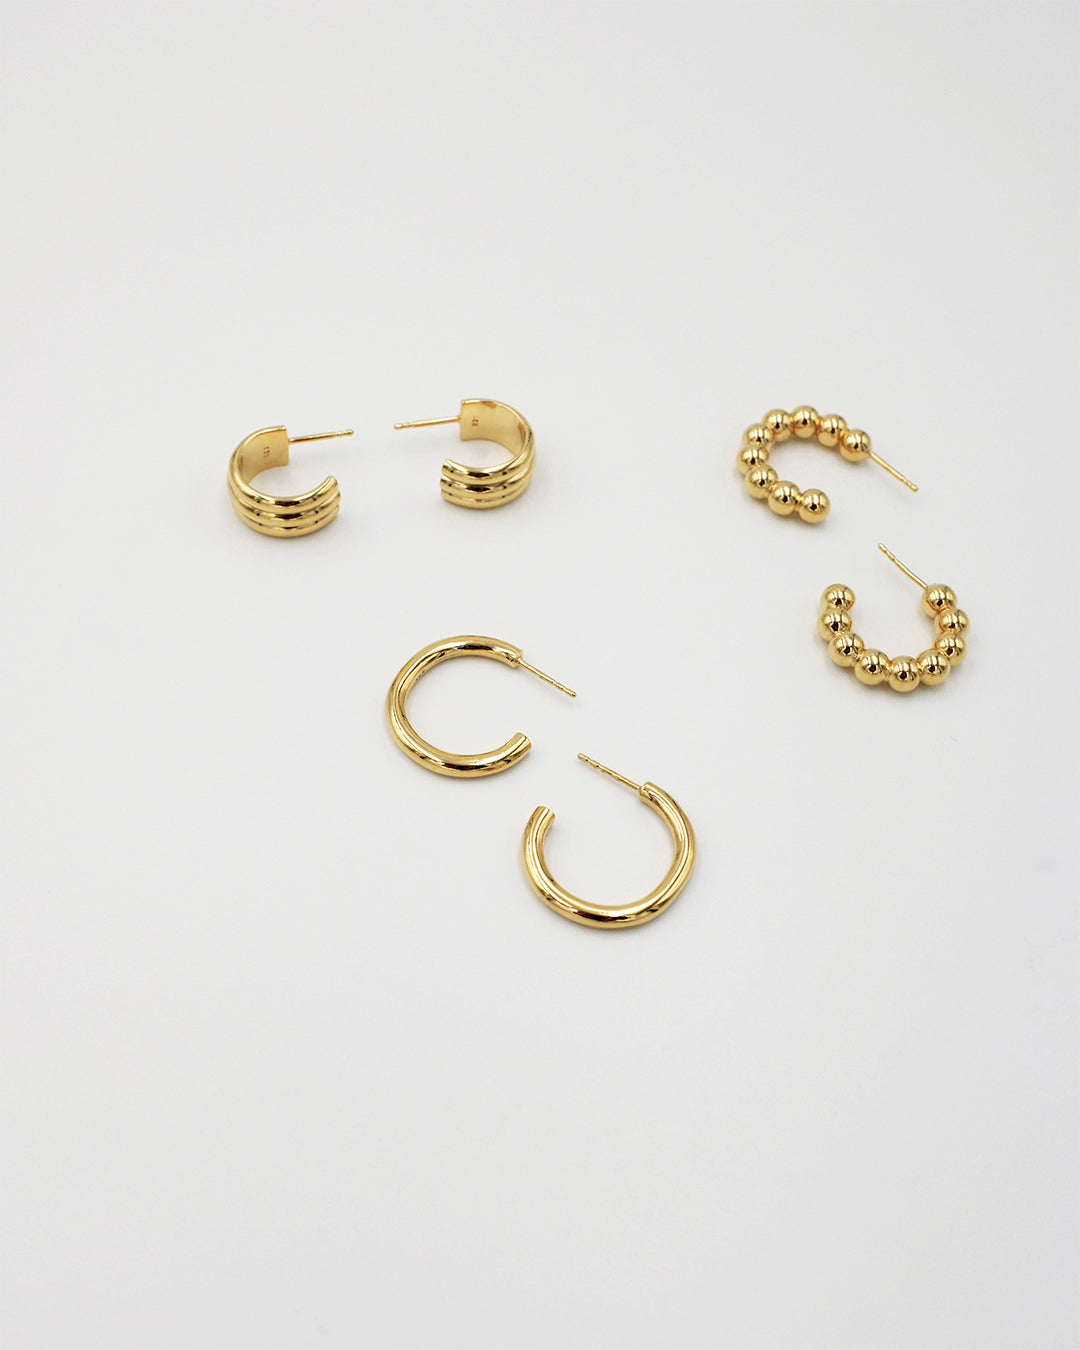 IDAMARI Lamé Hoop Earrings in Gold available at Lahn.shop